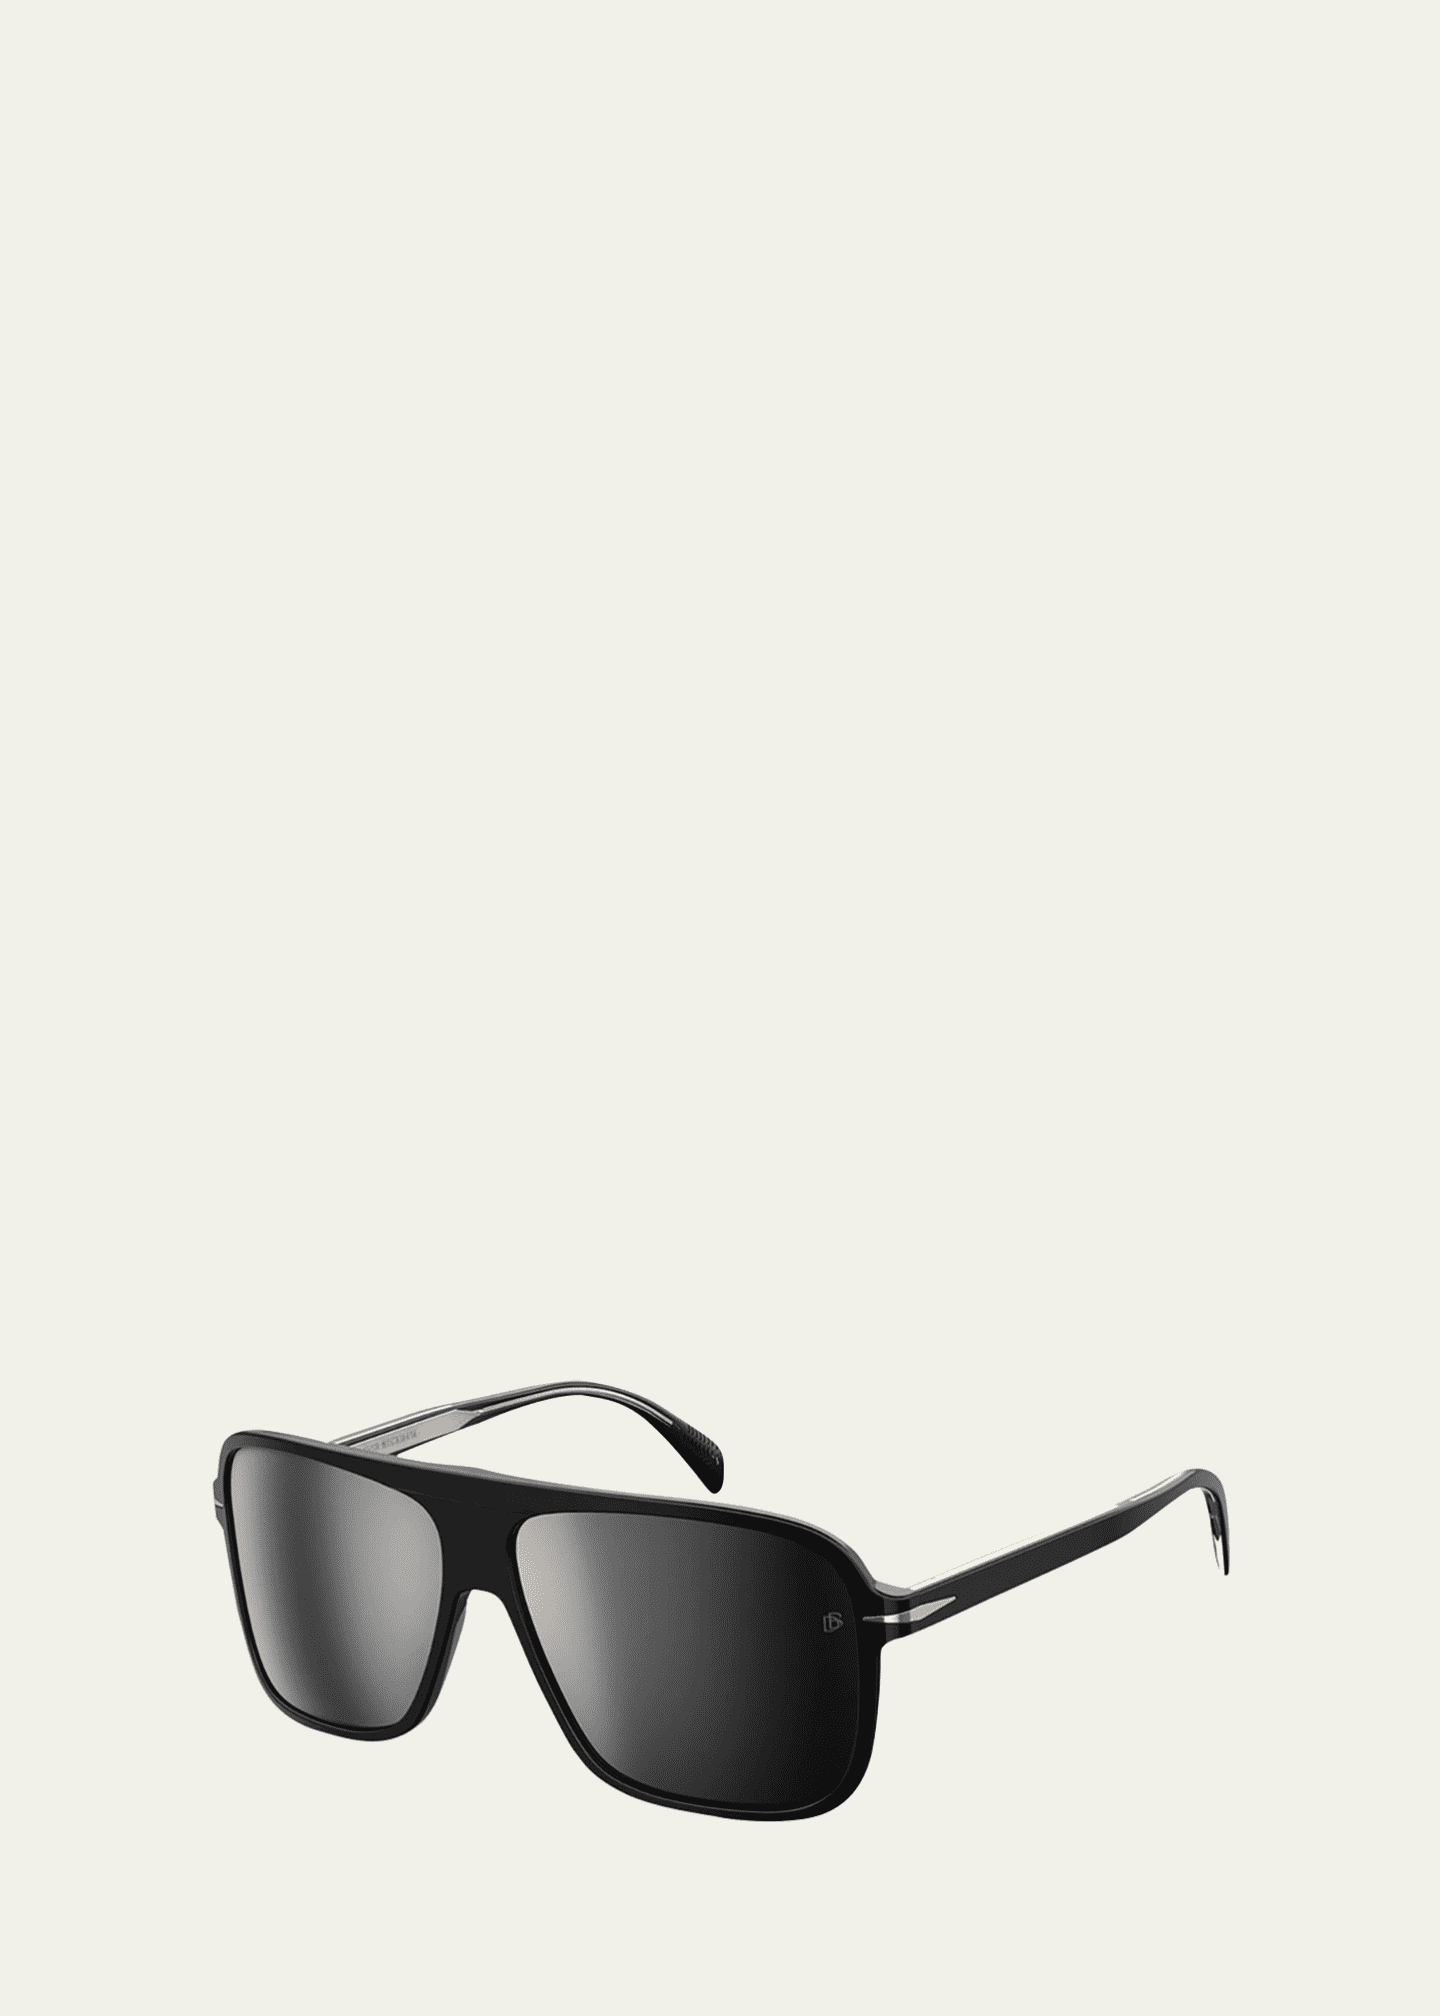 Shop David Beckham sunglasses